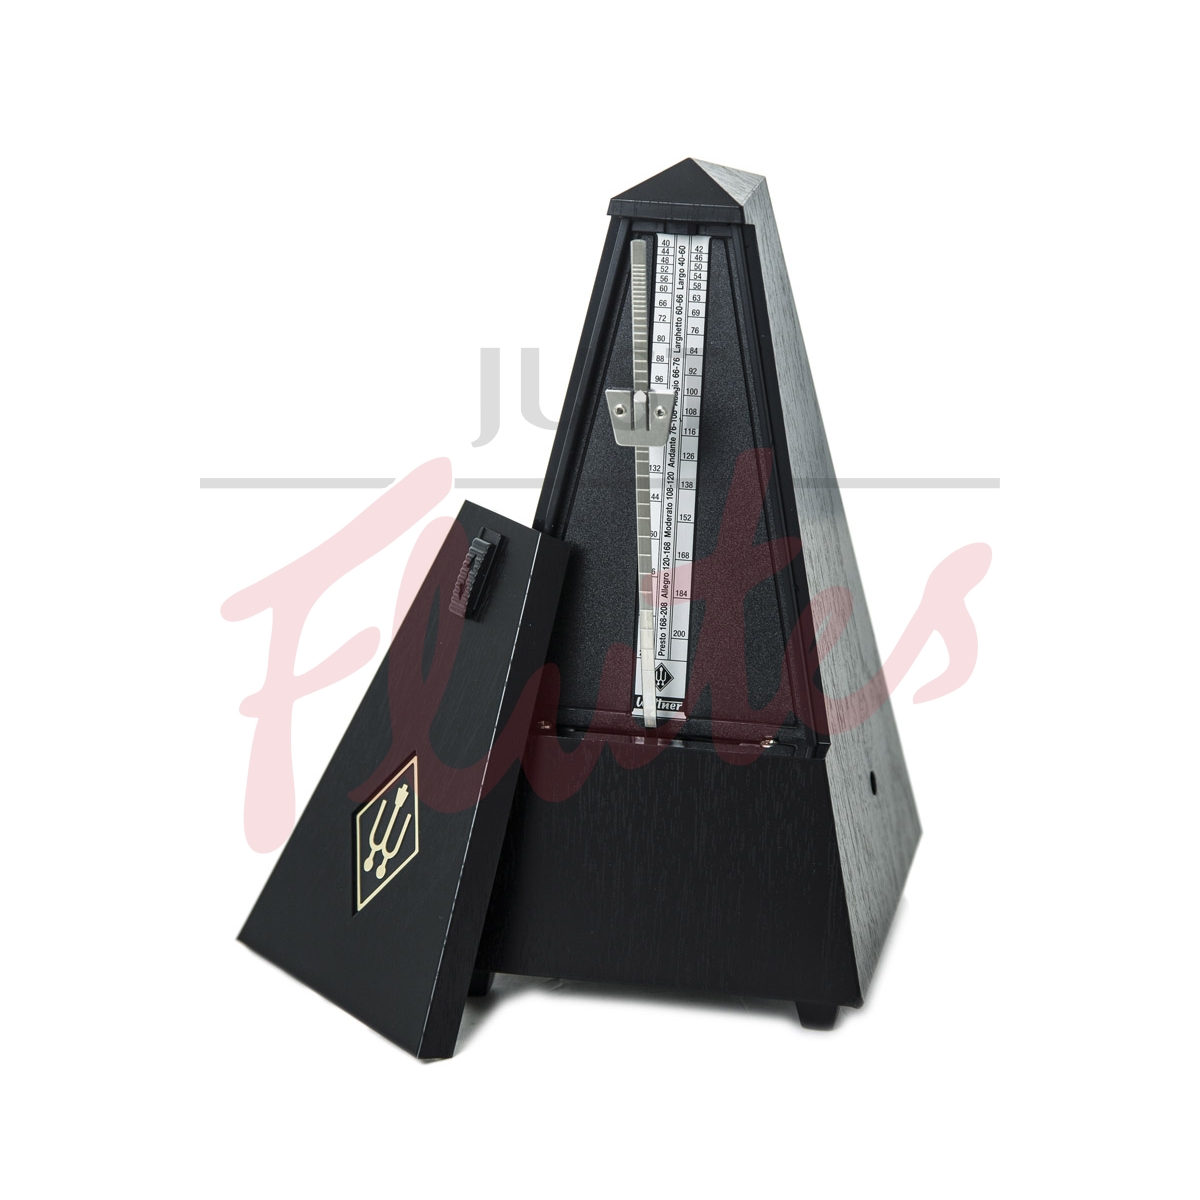 Wittner 845161 Plastic Pyramid Metronome, Black Finish